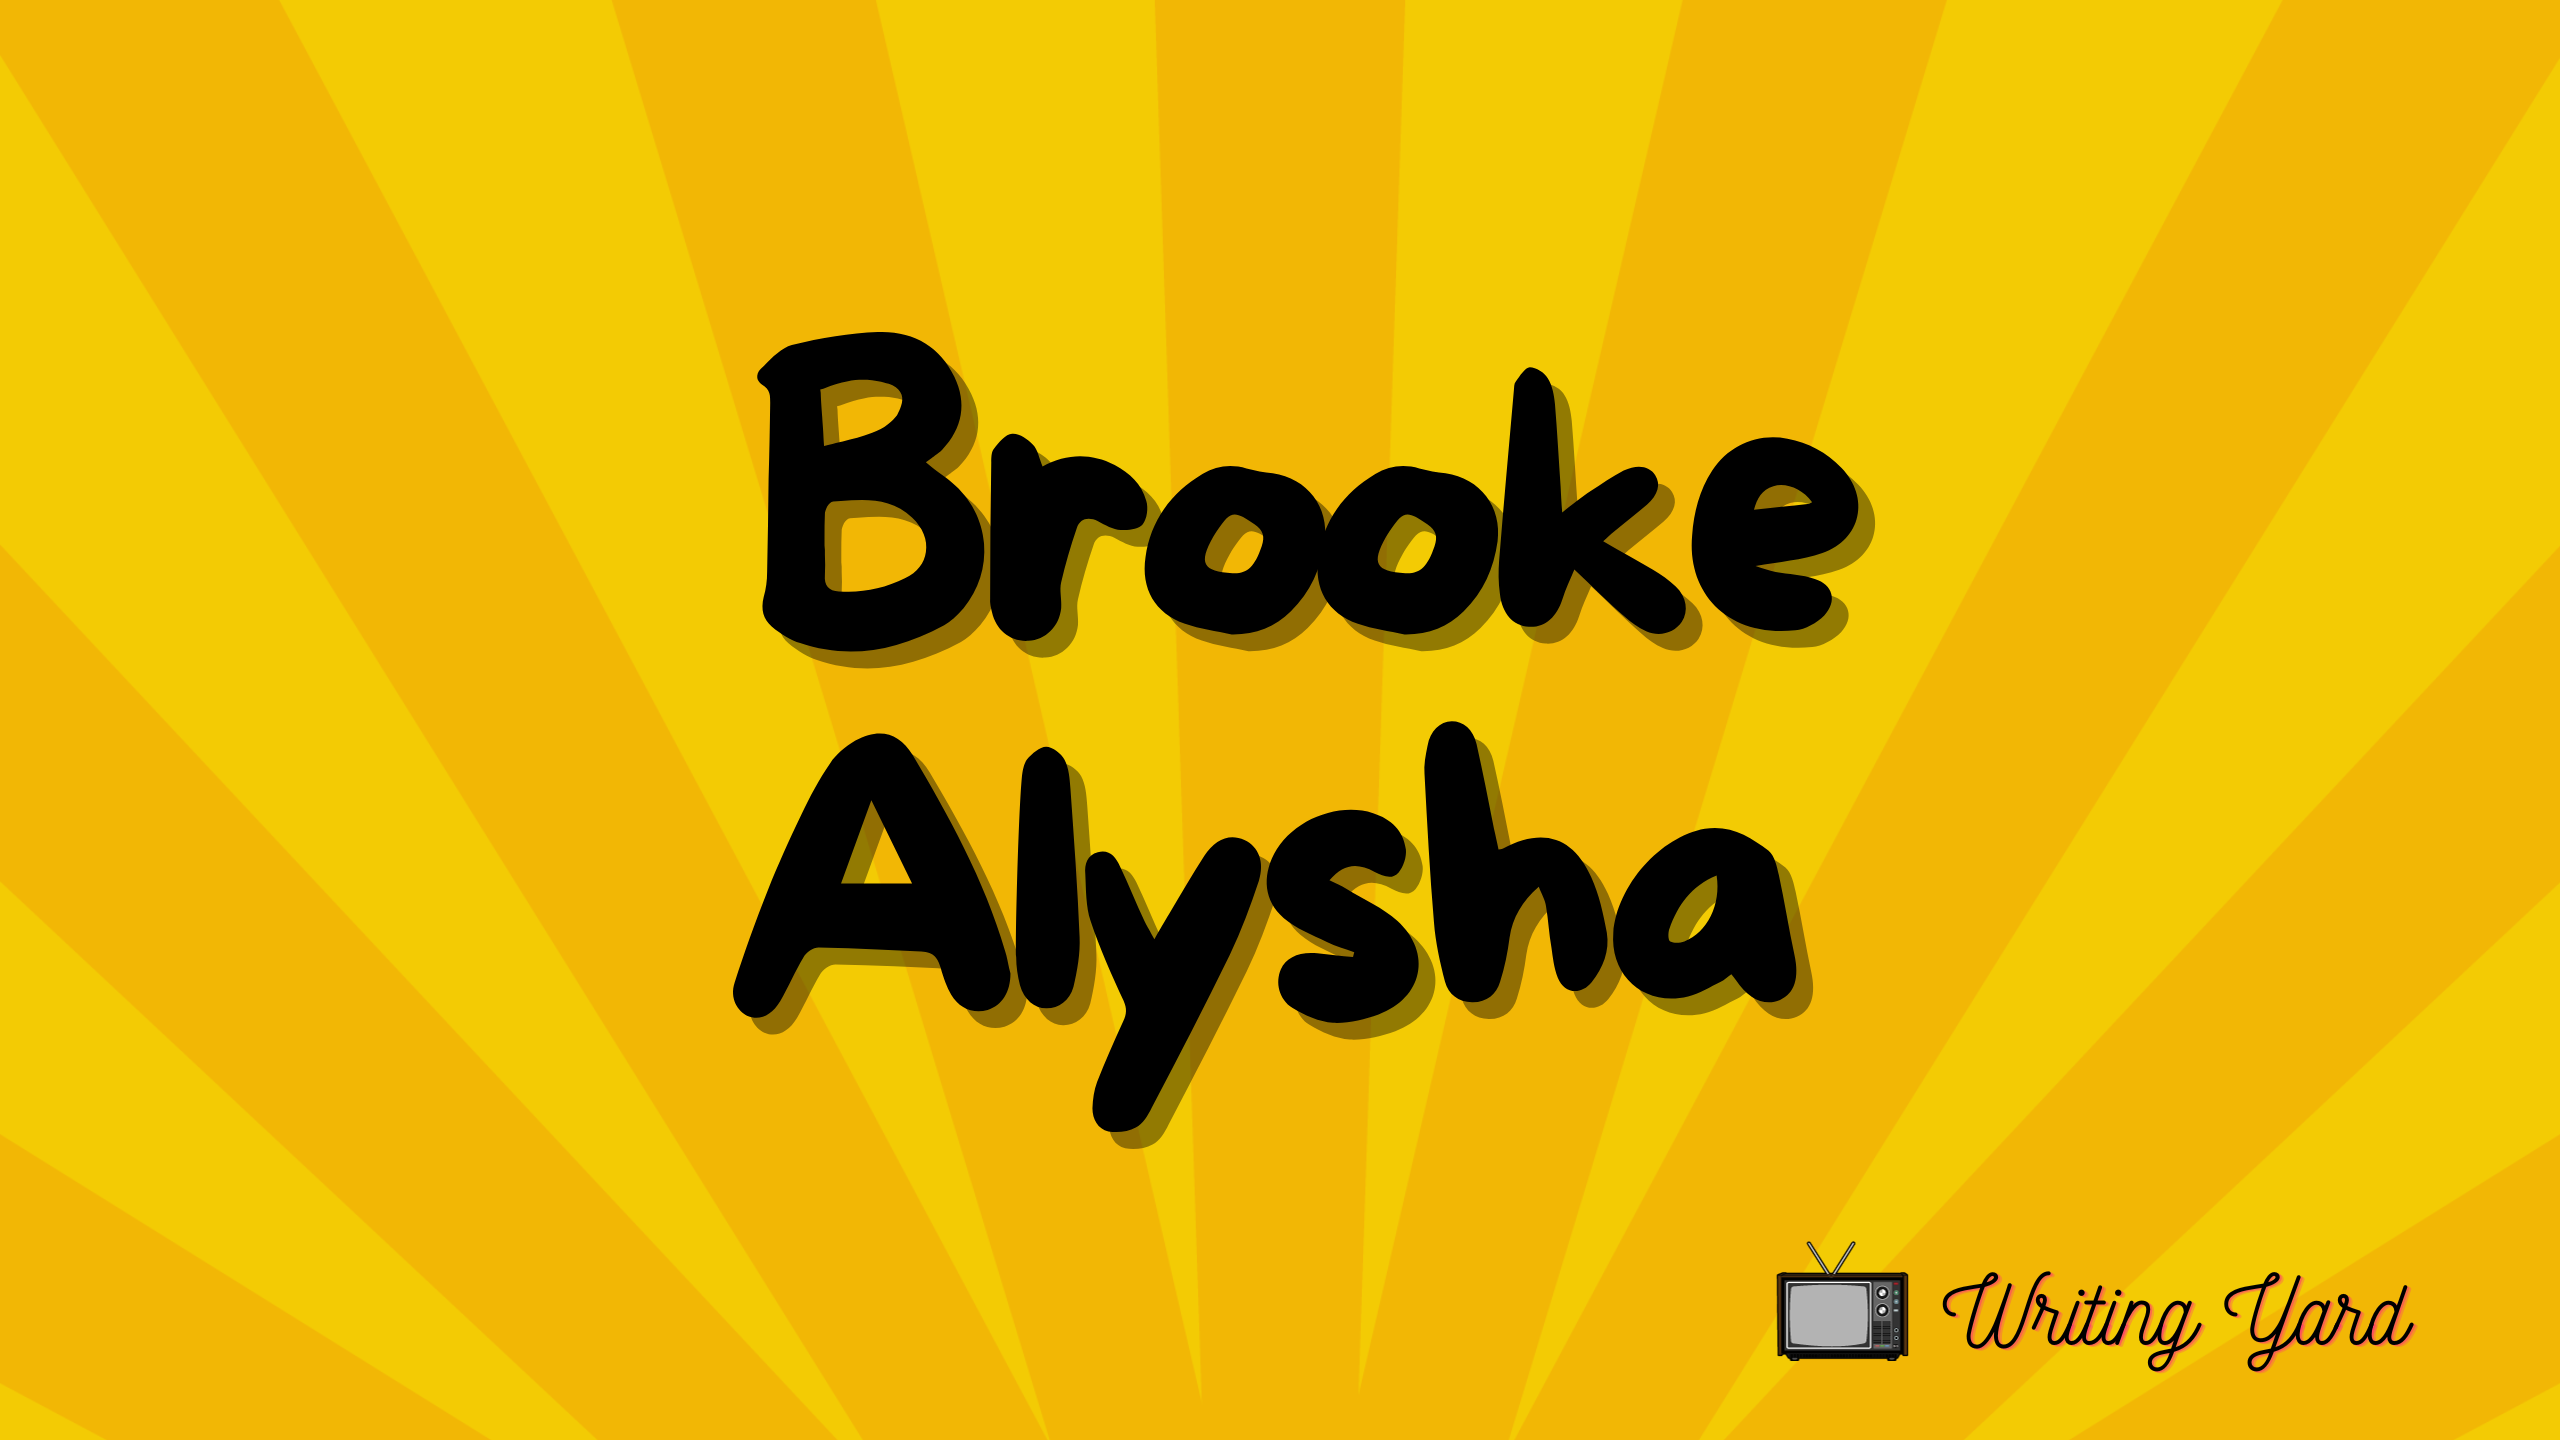 Brooke Alysha